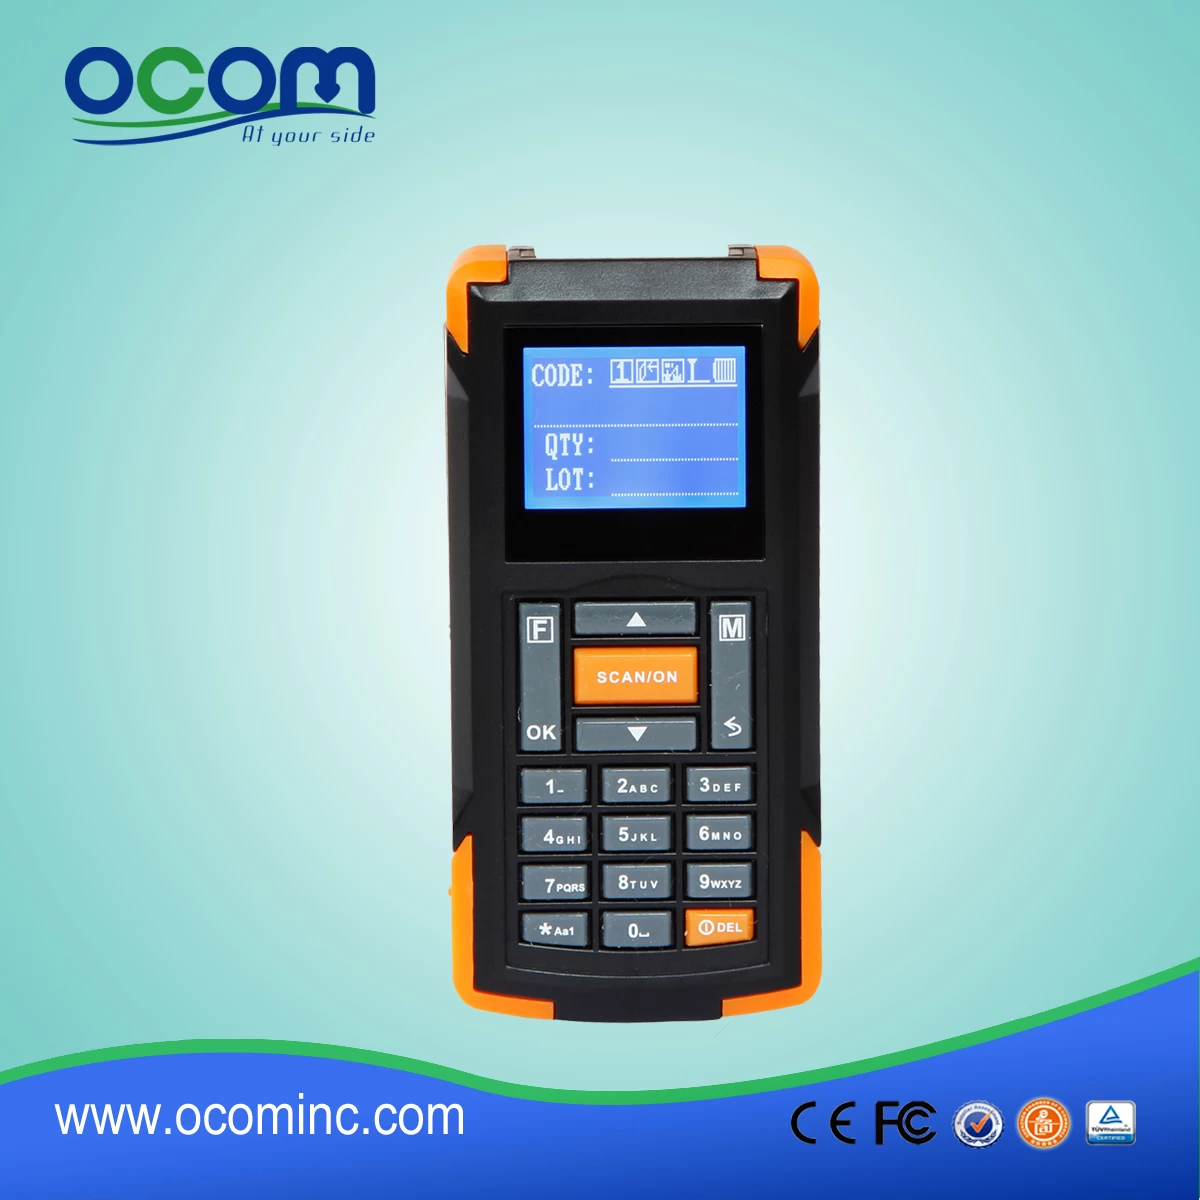 OCBS-D005 433Mhz long distance barcode scanner small, pocket scanner